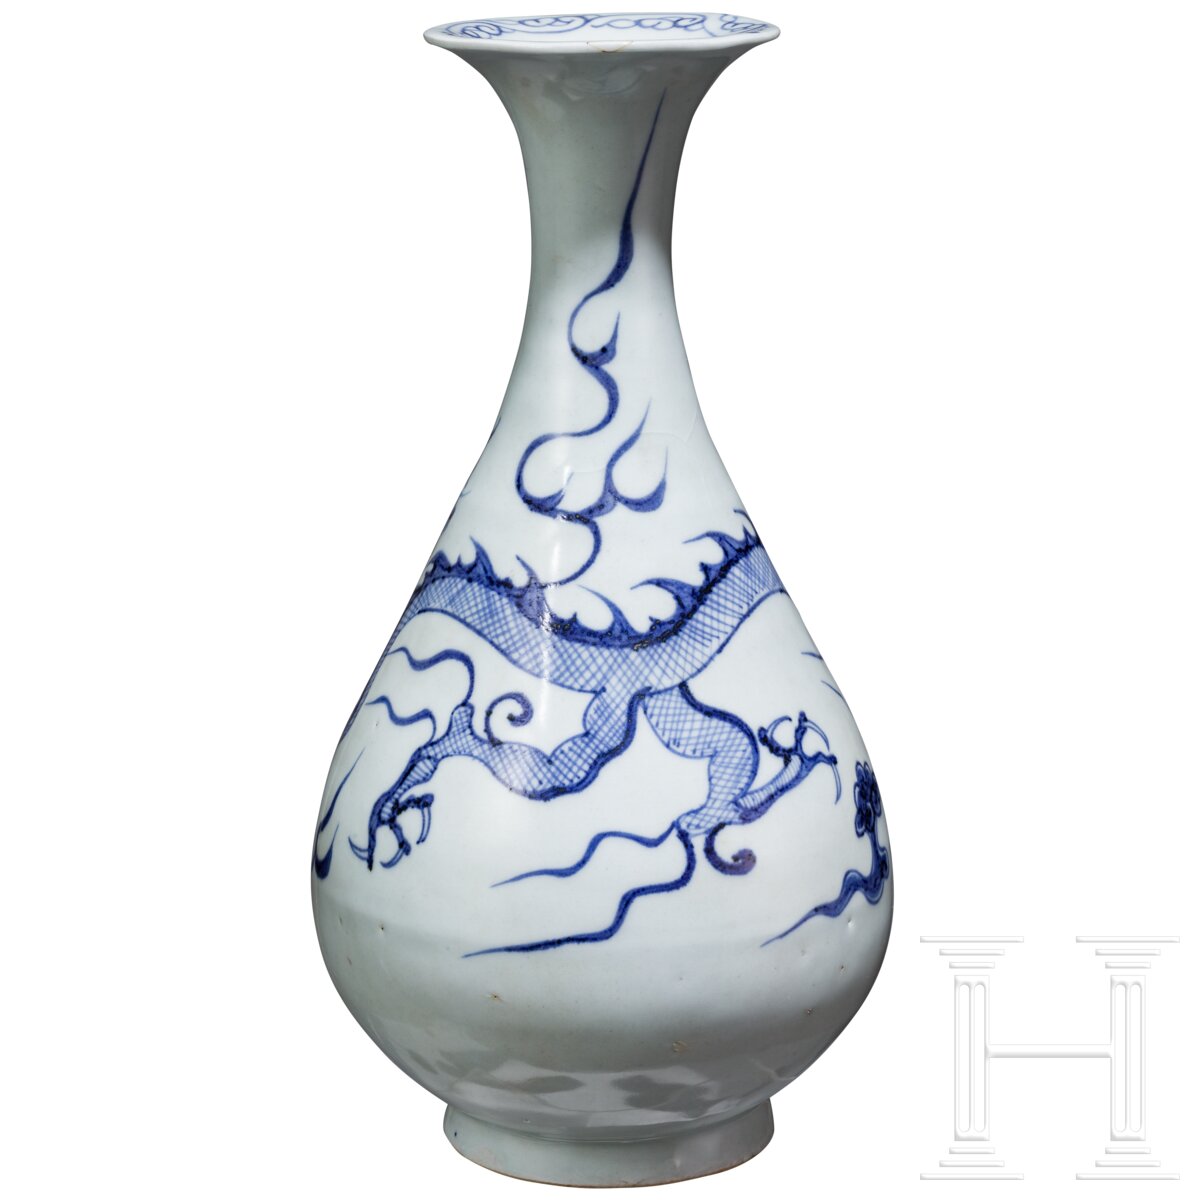 Birnenförmige blau-weiße Vase (Ping) mit Drache, China, wohl Yuan-Dynastie - Image 3 of 10